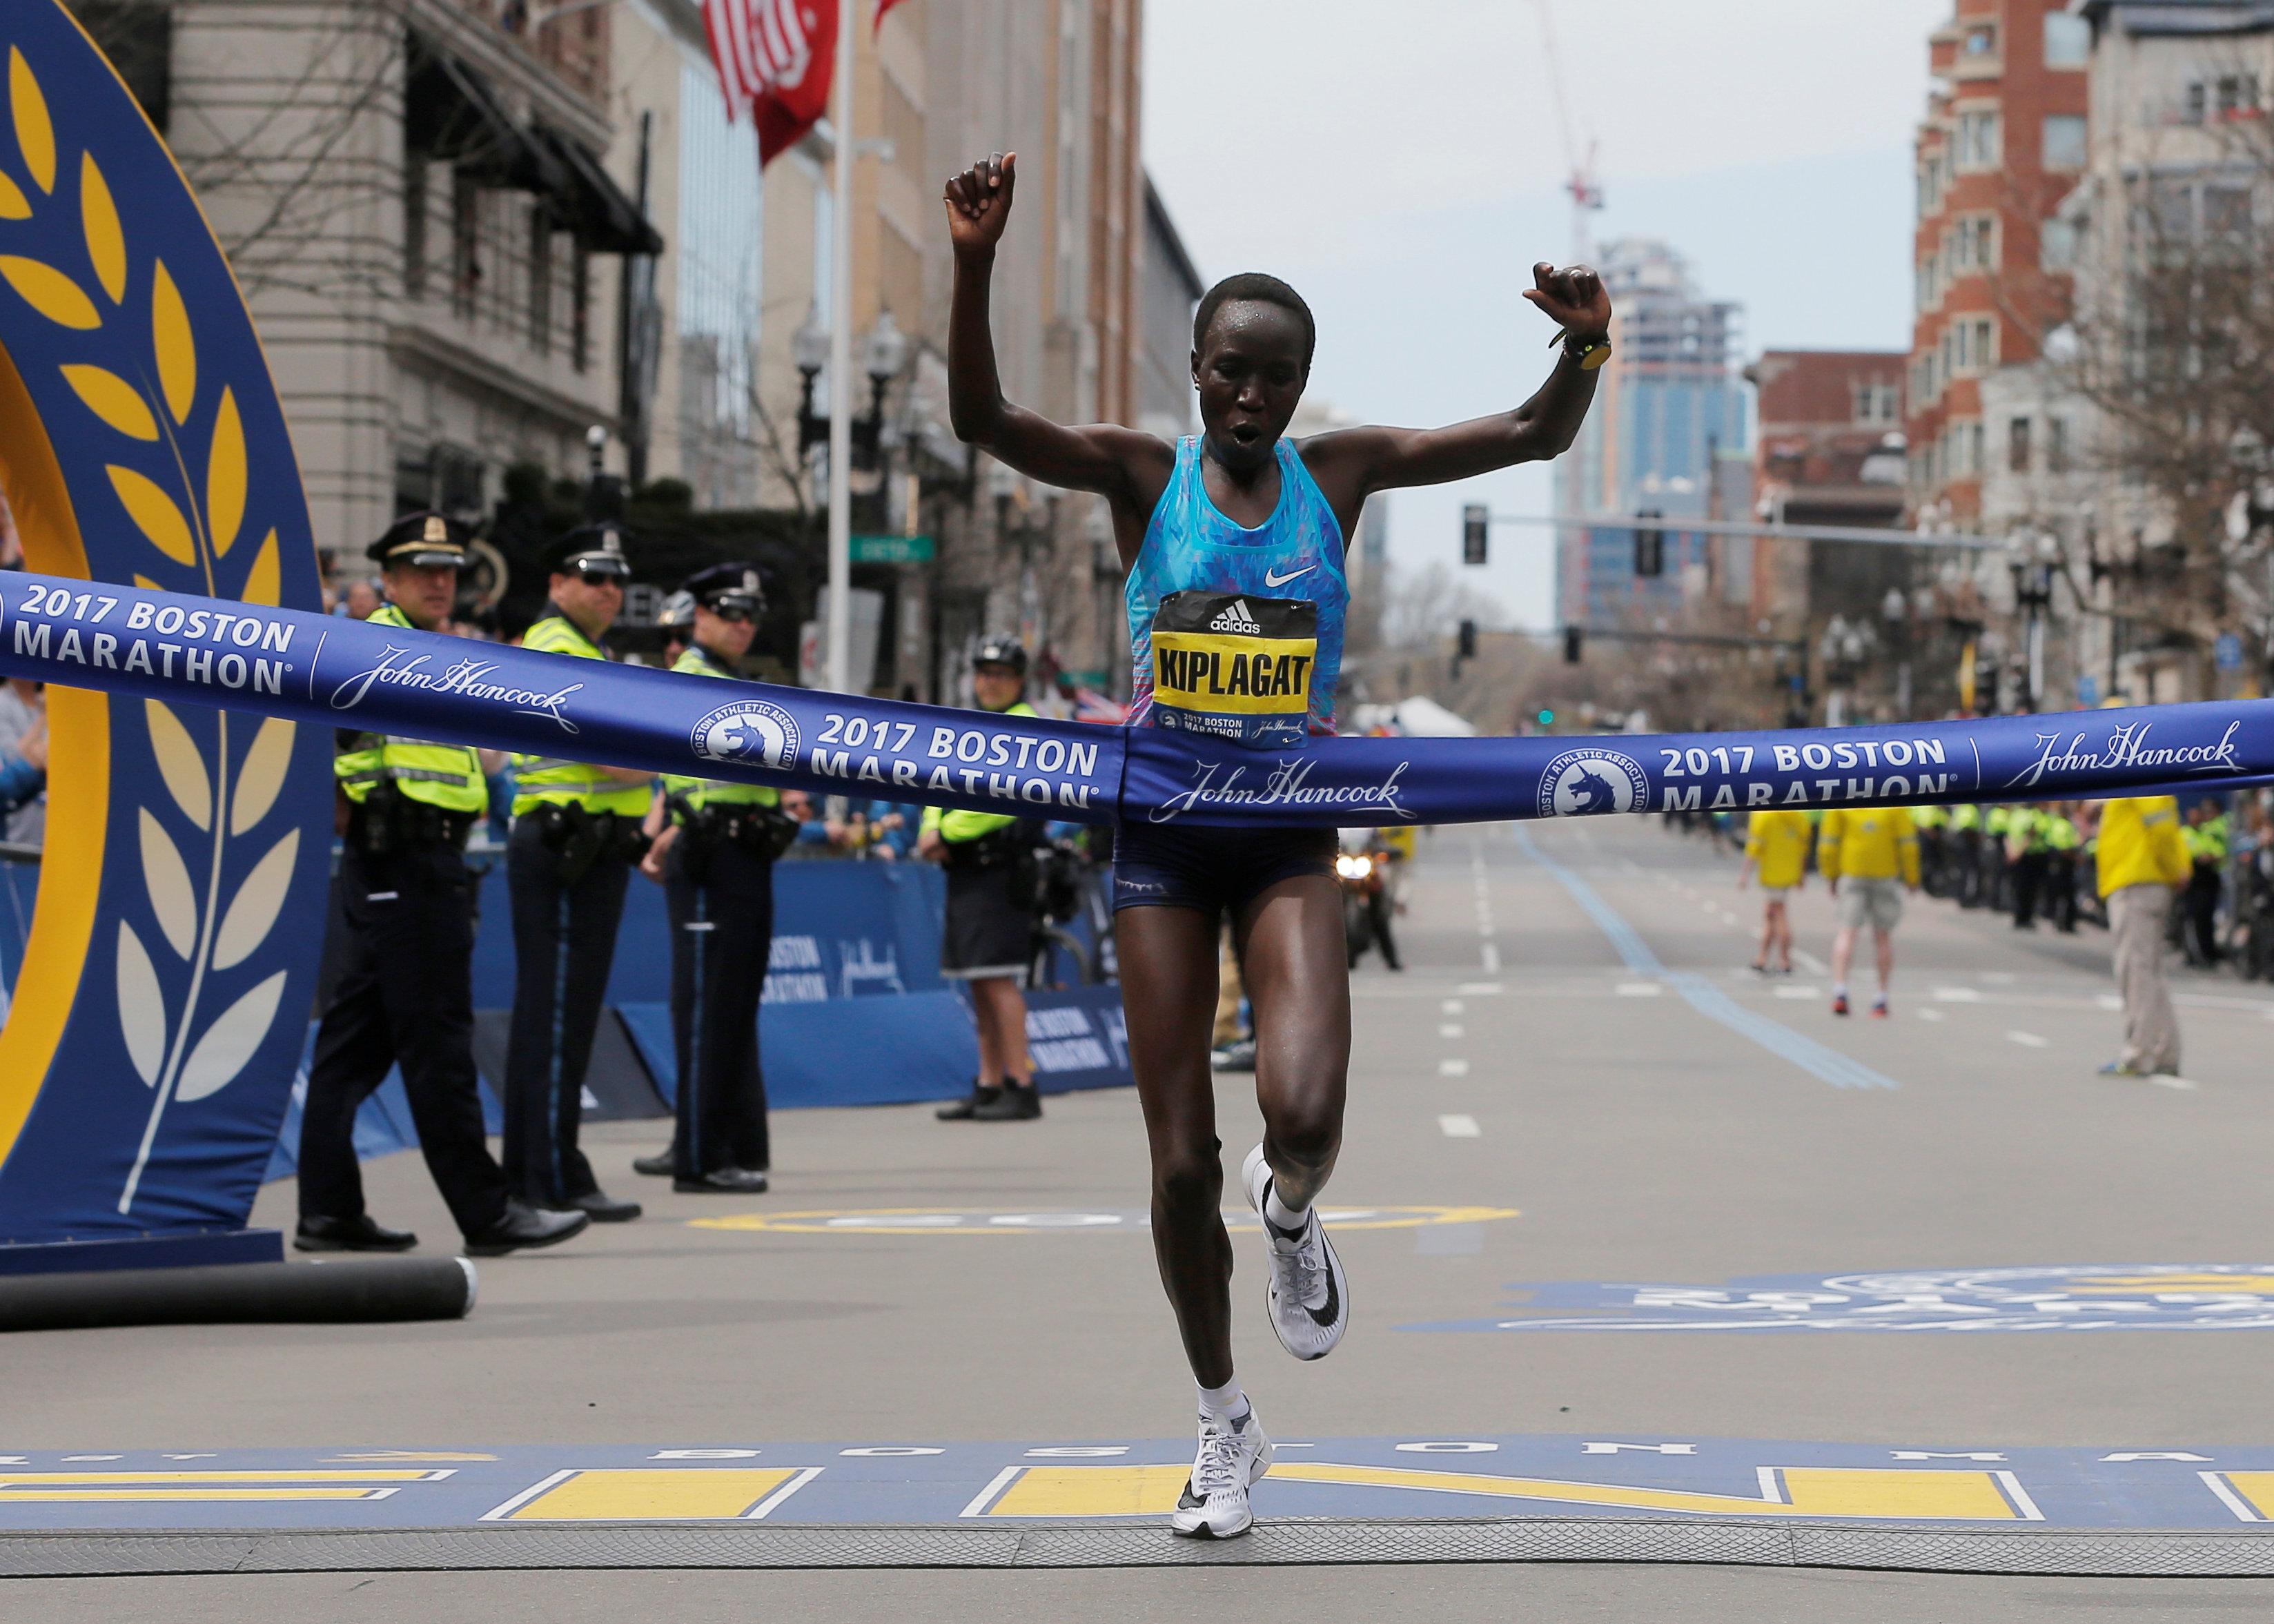 Boston Marathon to cap entrants at 20,000 amid COVID19 GMA News Online